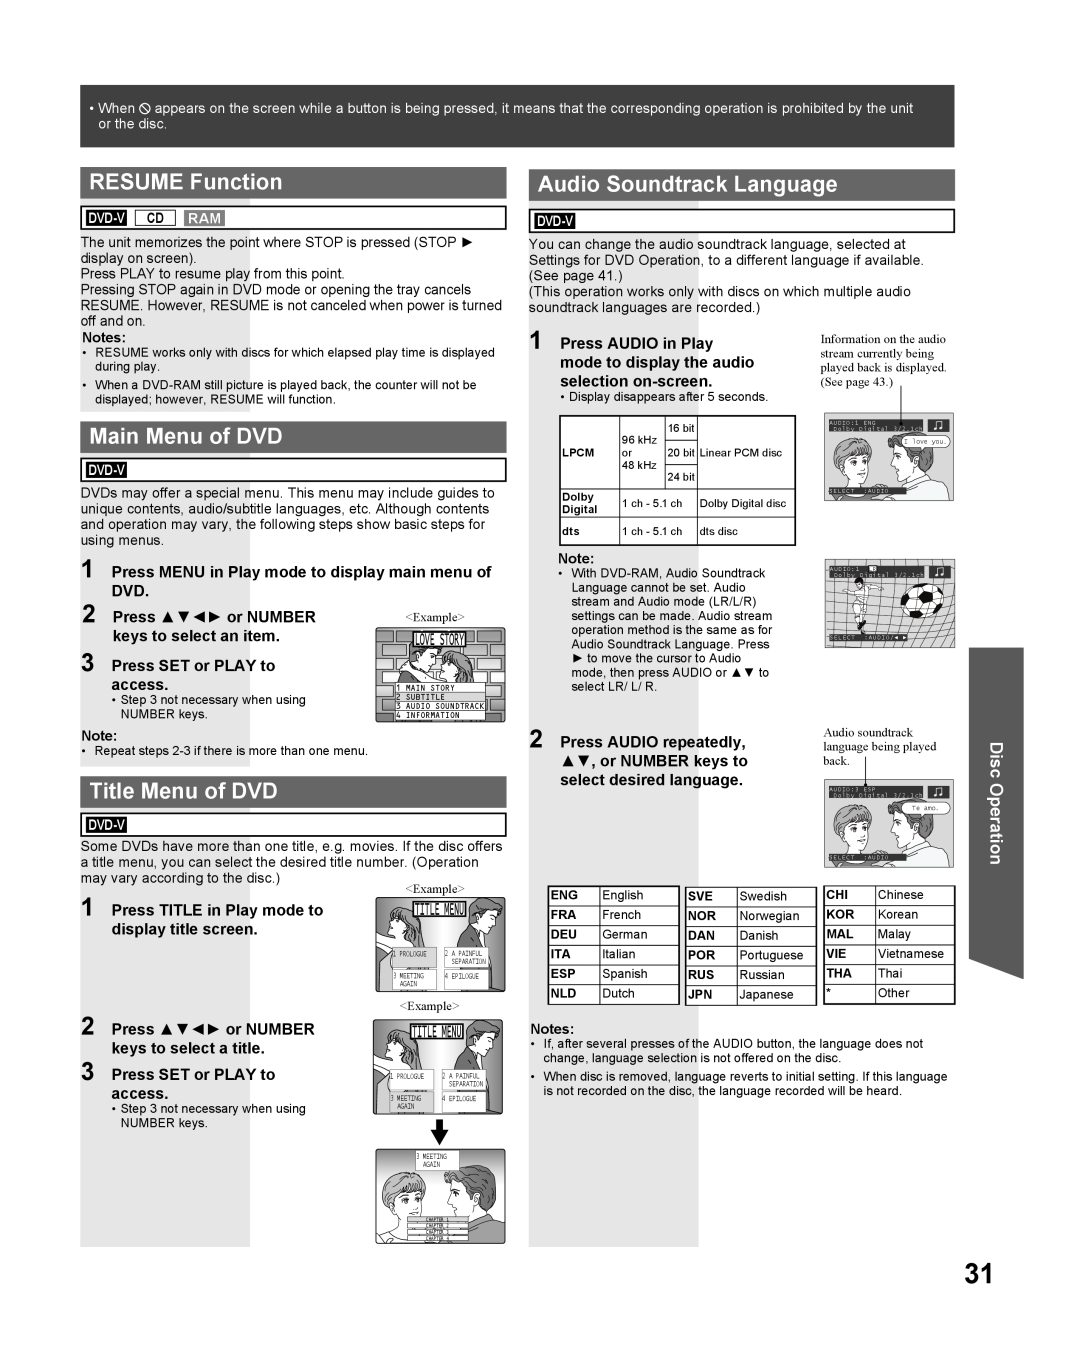 Panasonic PV-27DF5 RESUME Function, Main Menu of DVD, Title Menu of DVD, Audio Soundtrack Language, Disc Operation, access 